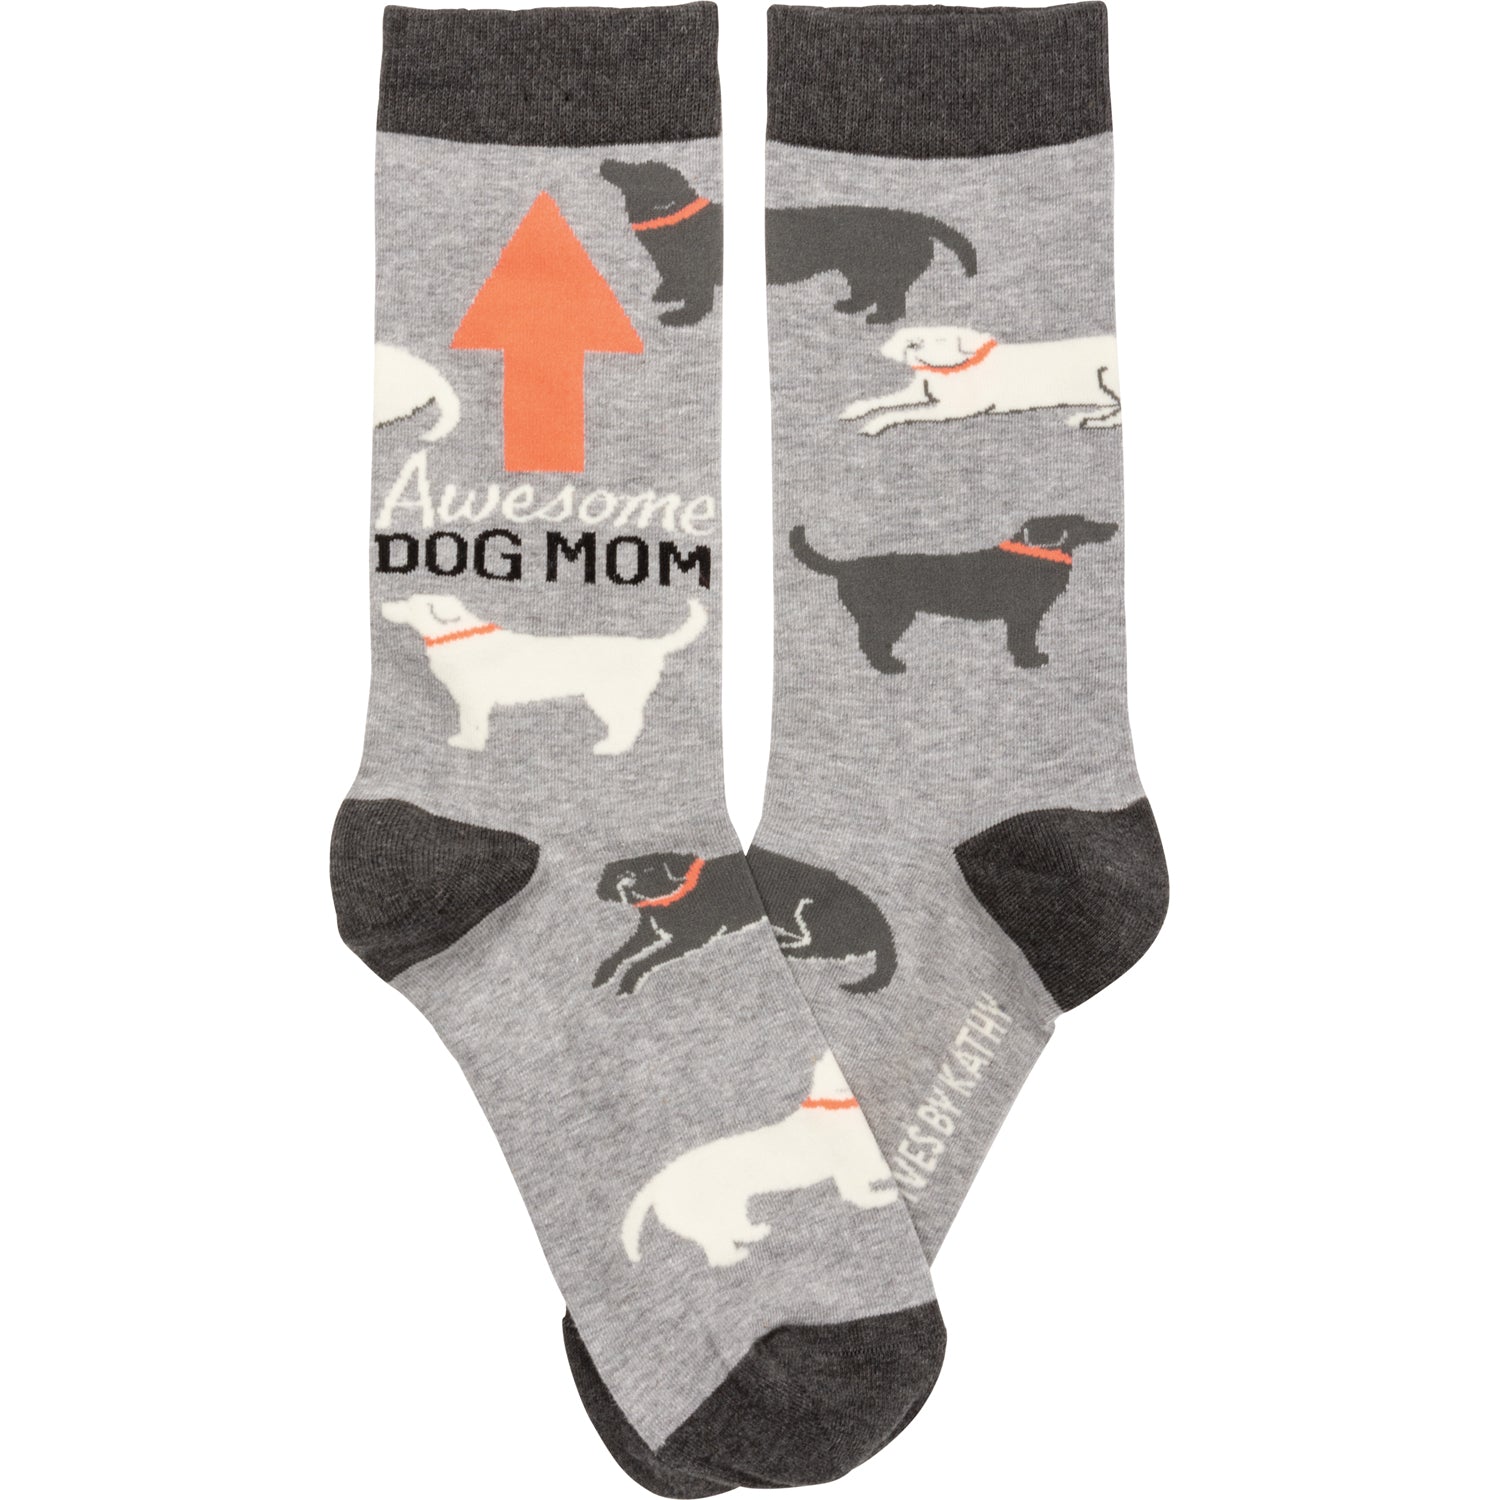 Primitives 105936 "Awesome Dog Mom" Socks